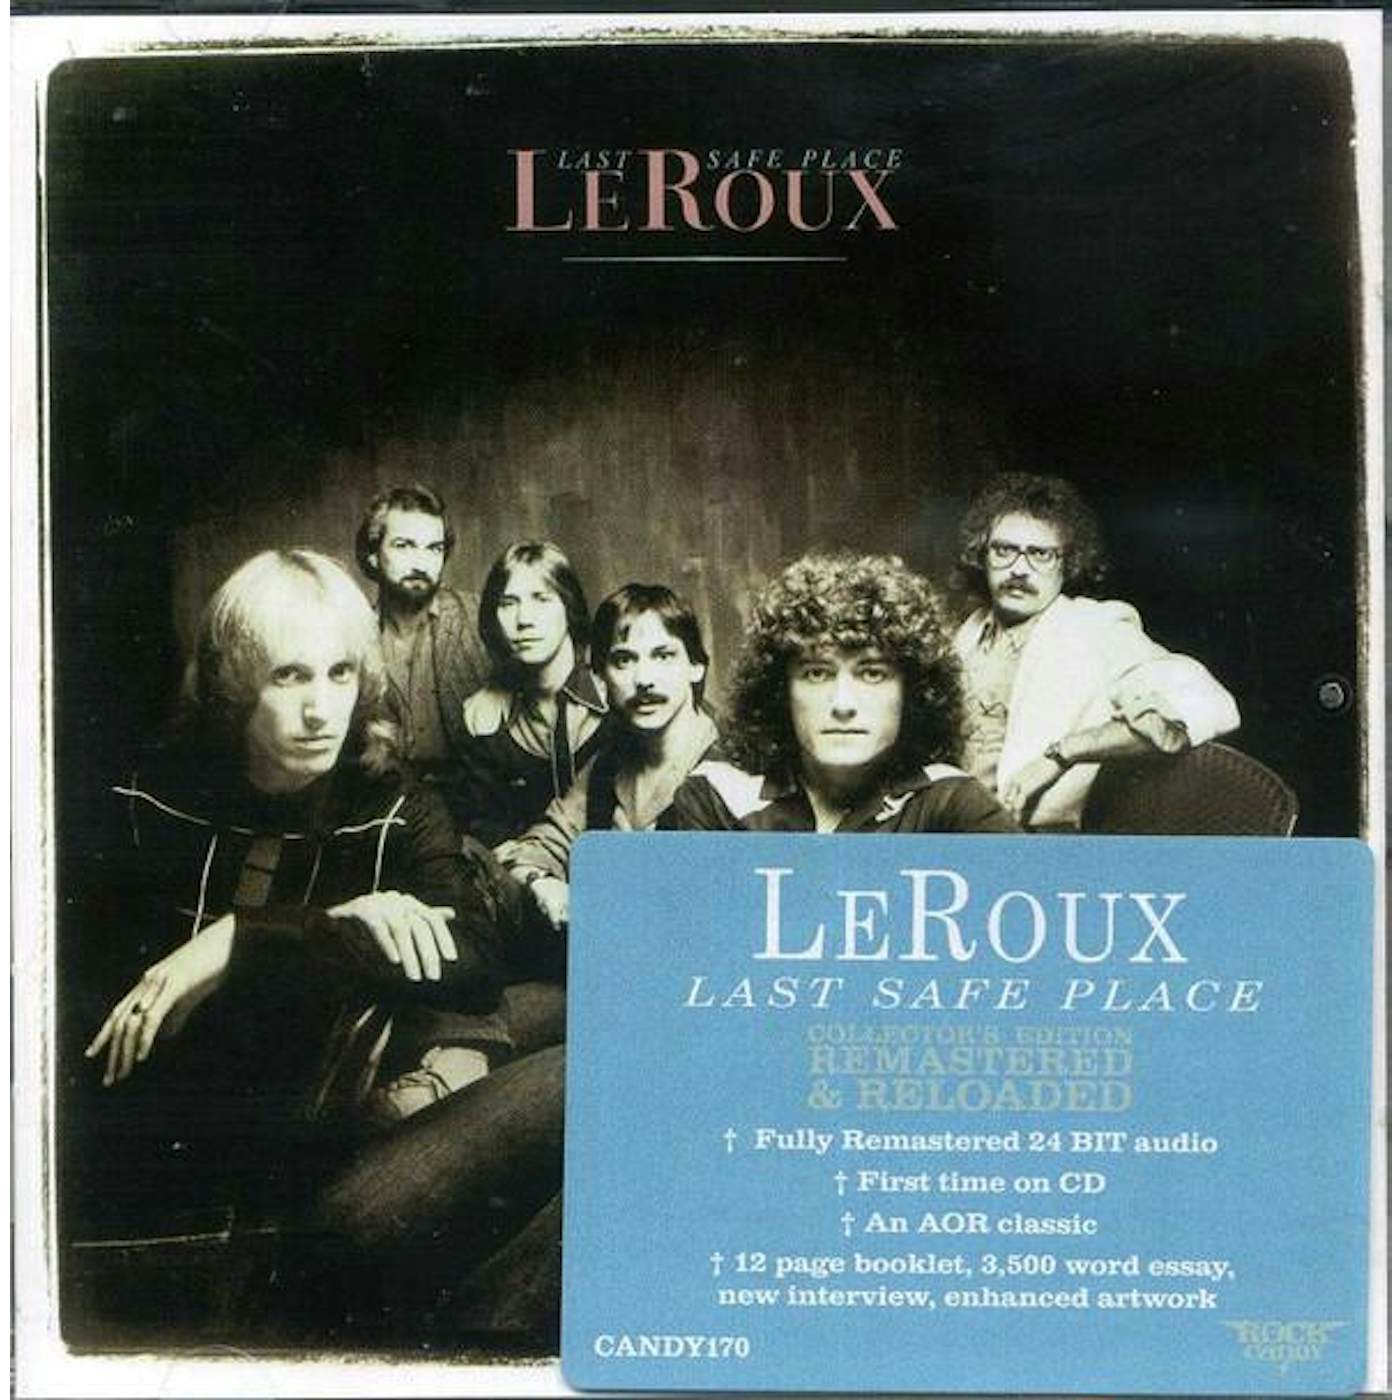 LeRoux LAST SAFE PLACE CD